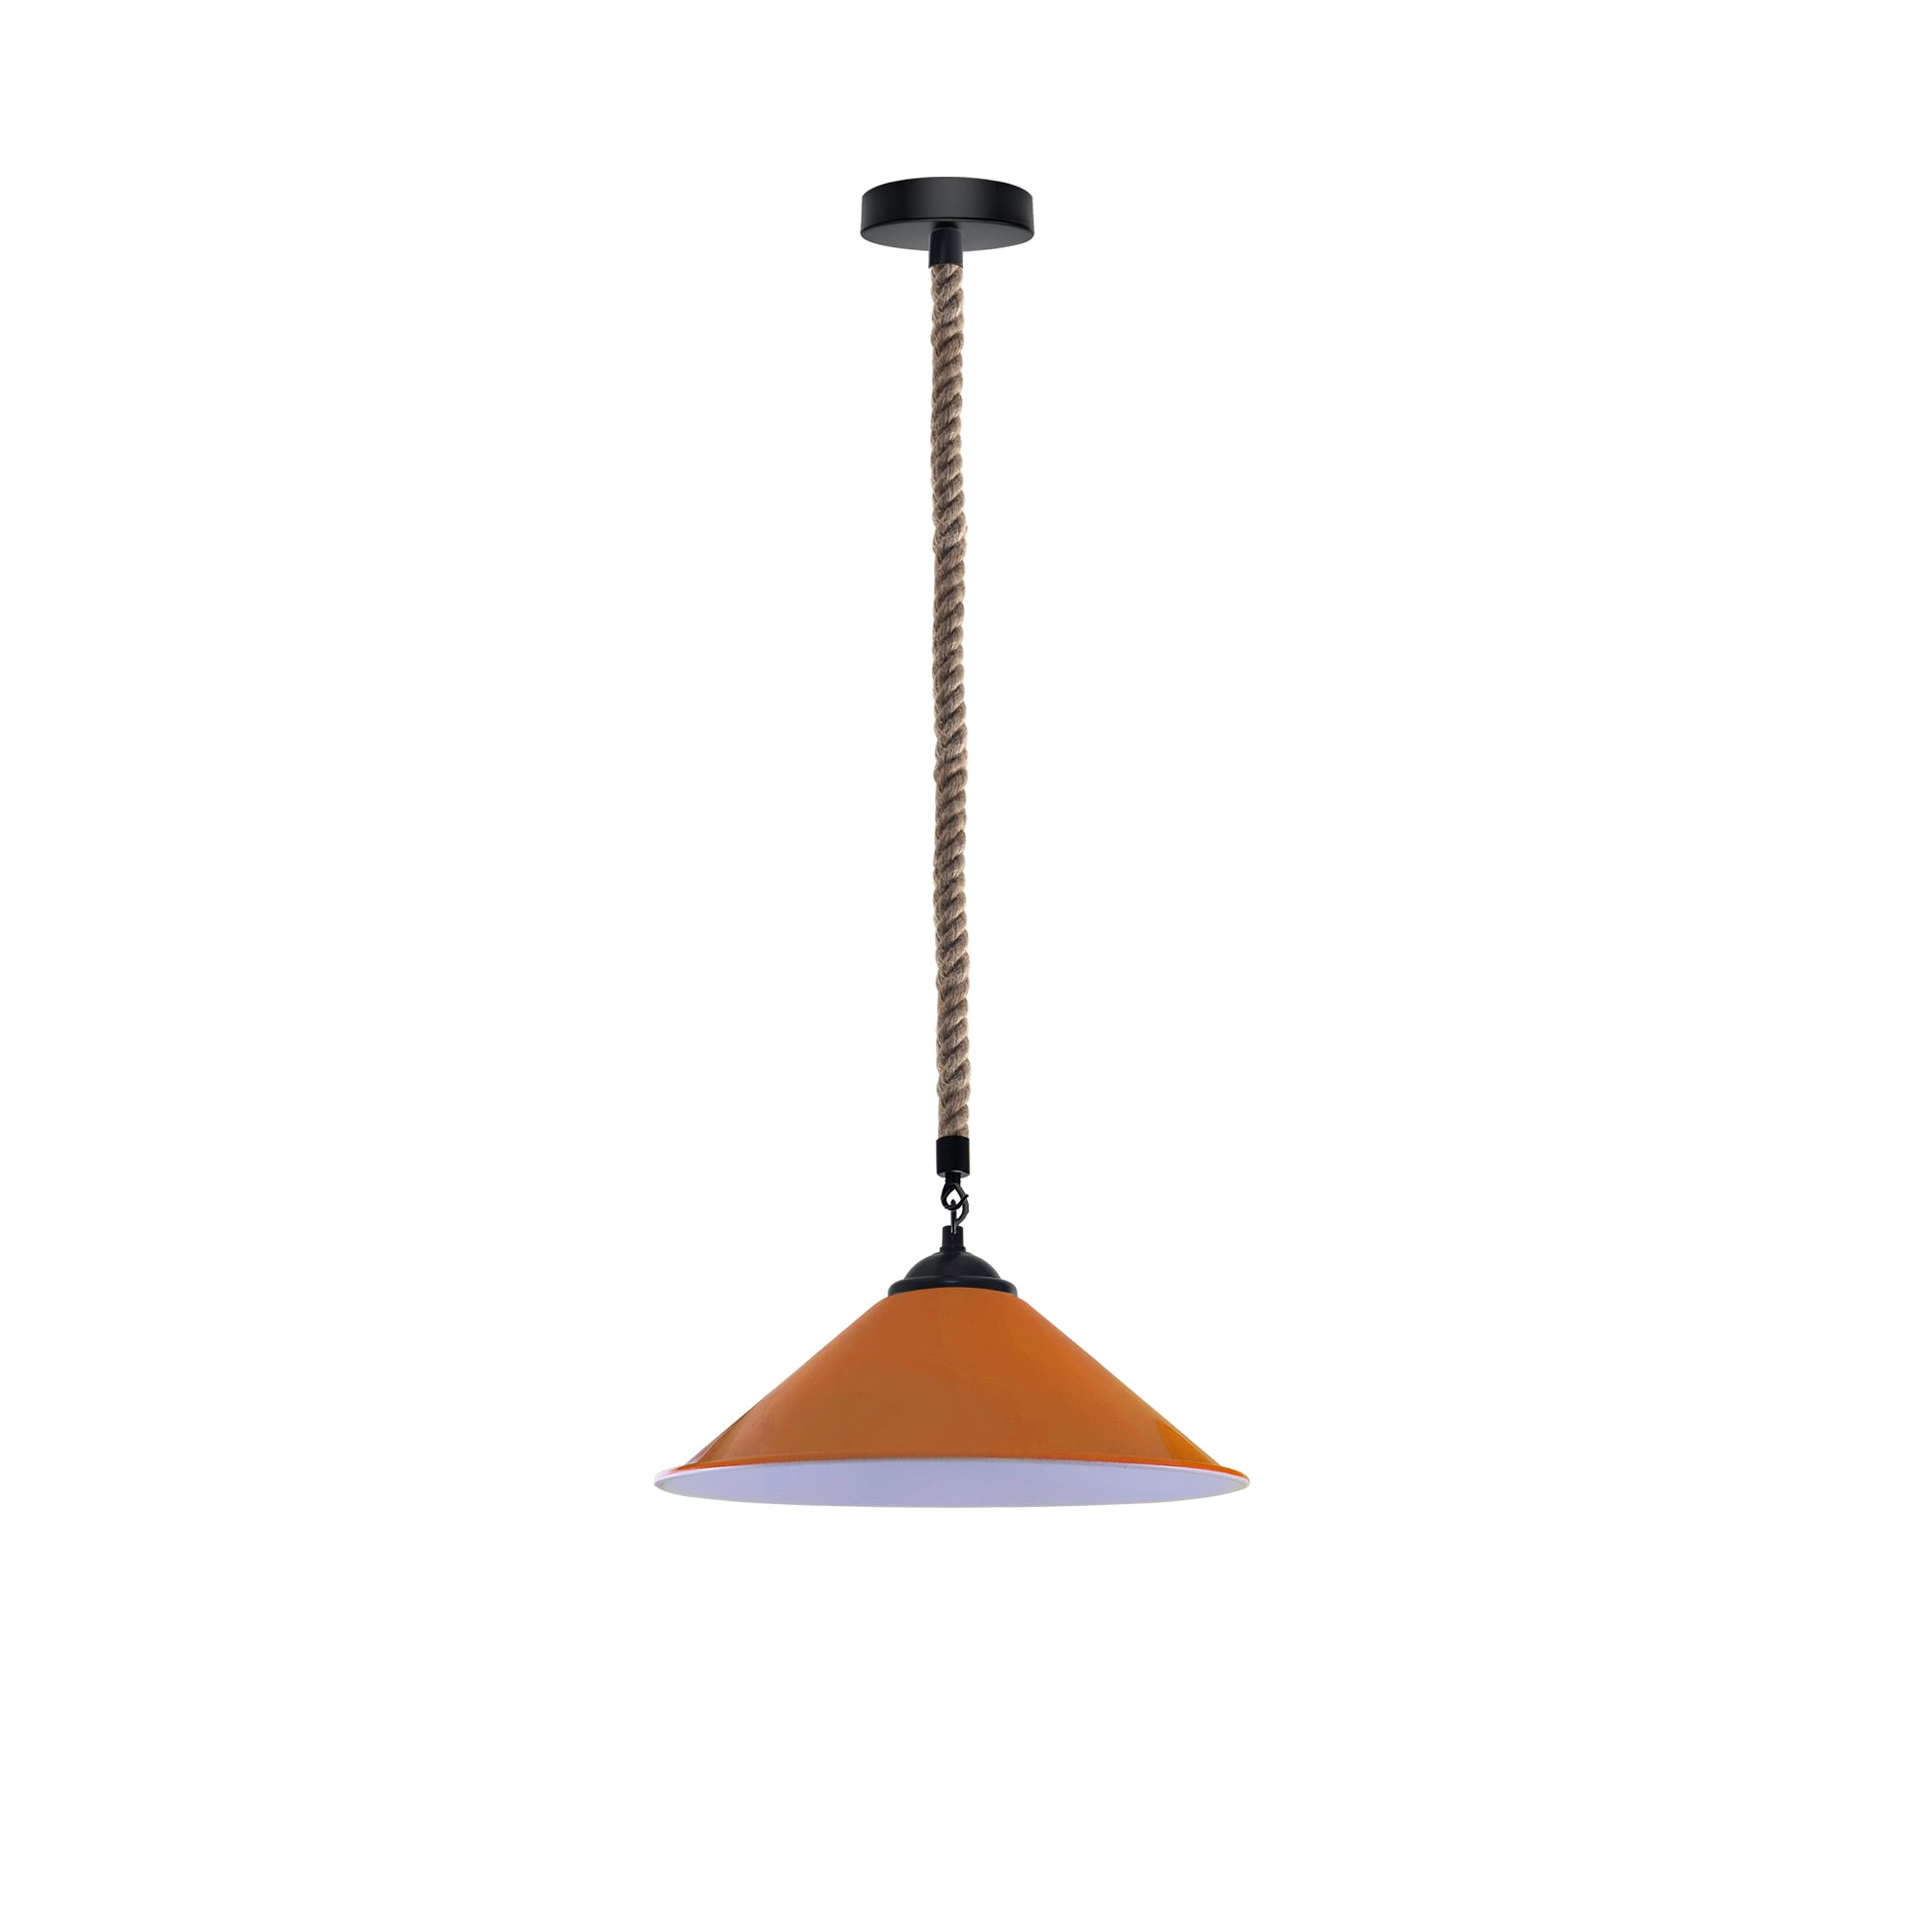  hemp pendant lamp lighting with light bulb